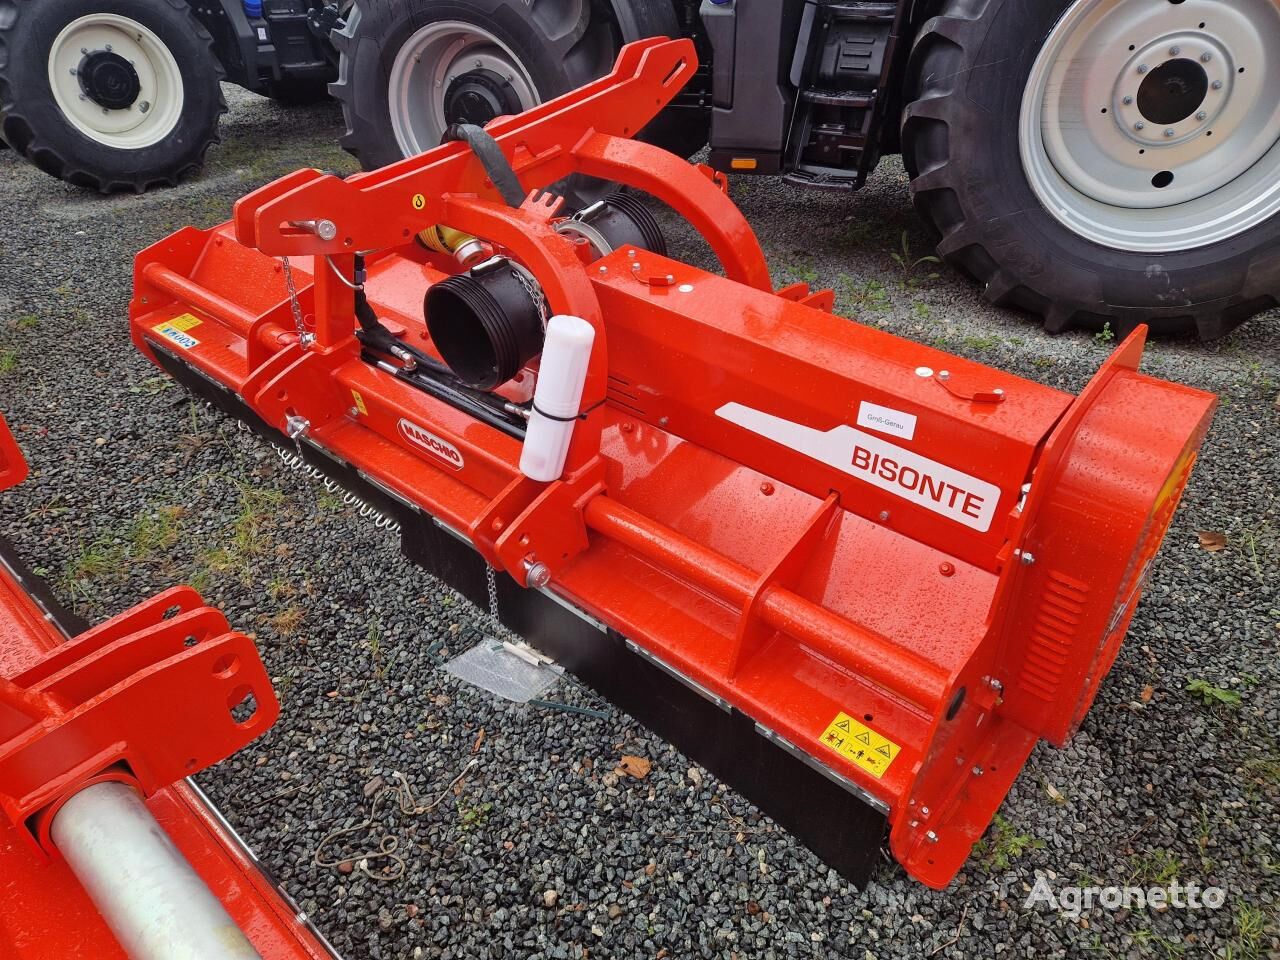 novi Maschio BISONTE 280 traktorski malčer